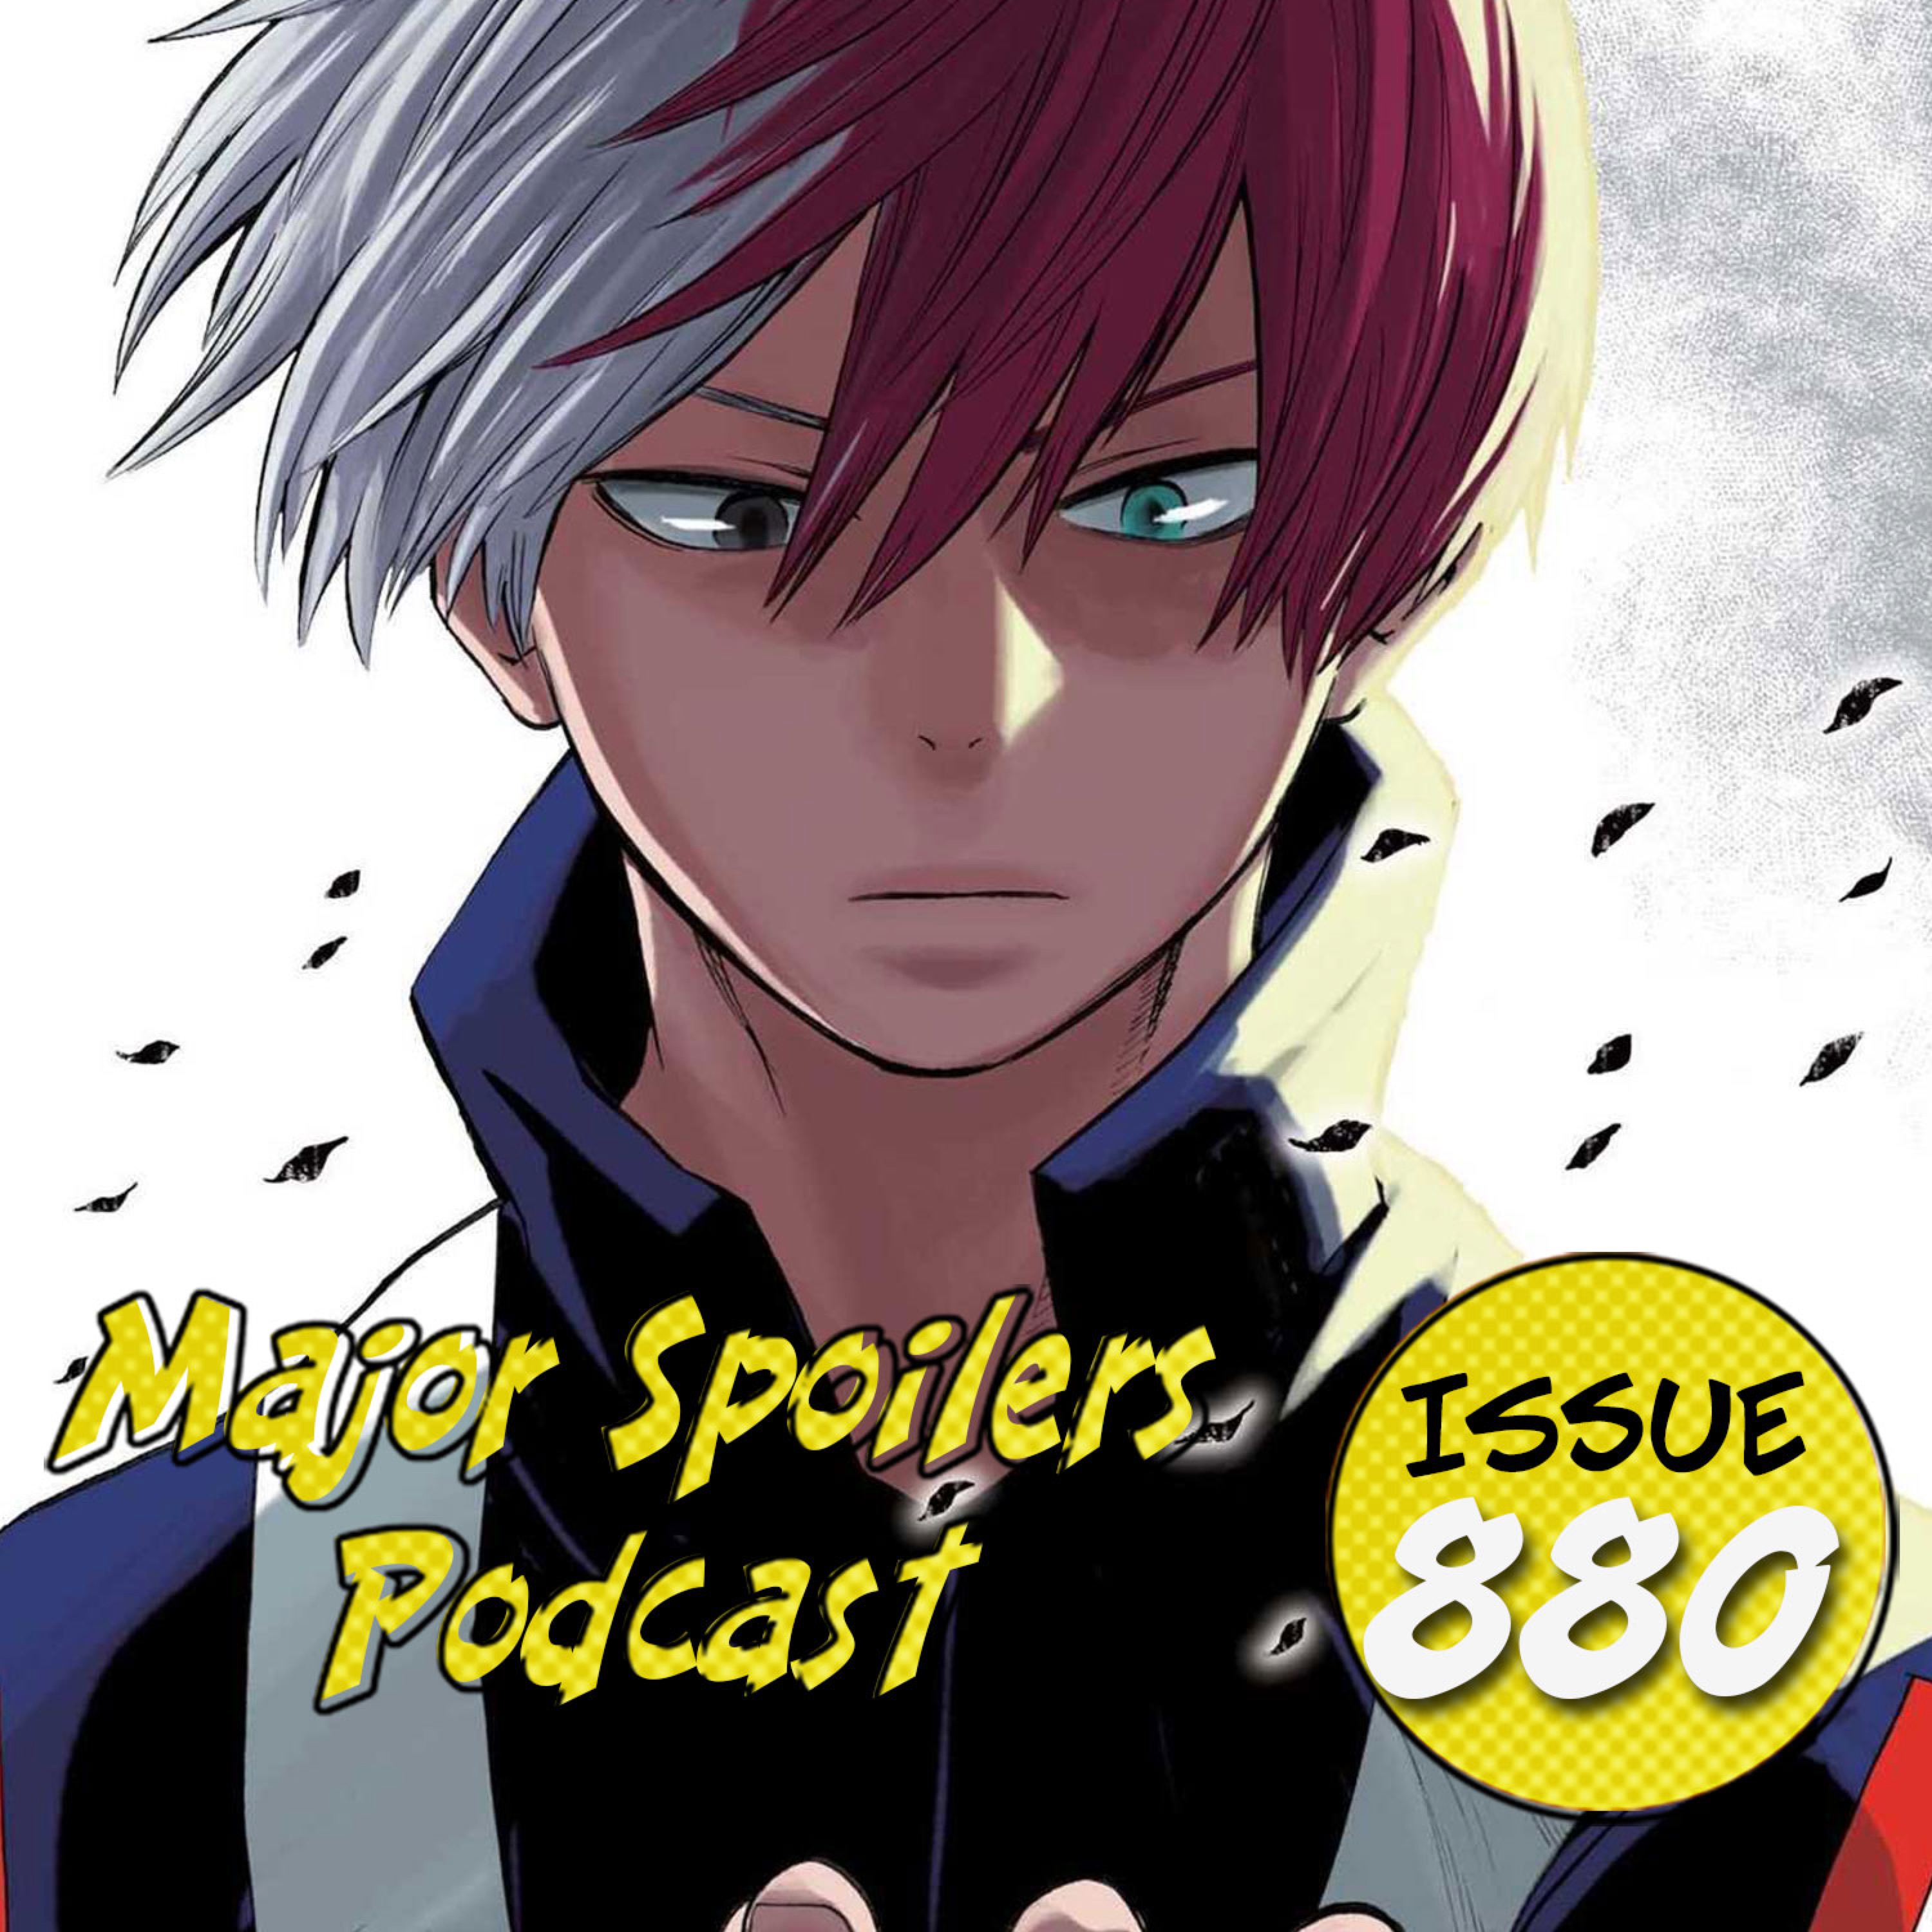 Major Spoilers Podcast #880: My Hero Academia Volume 5